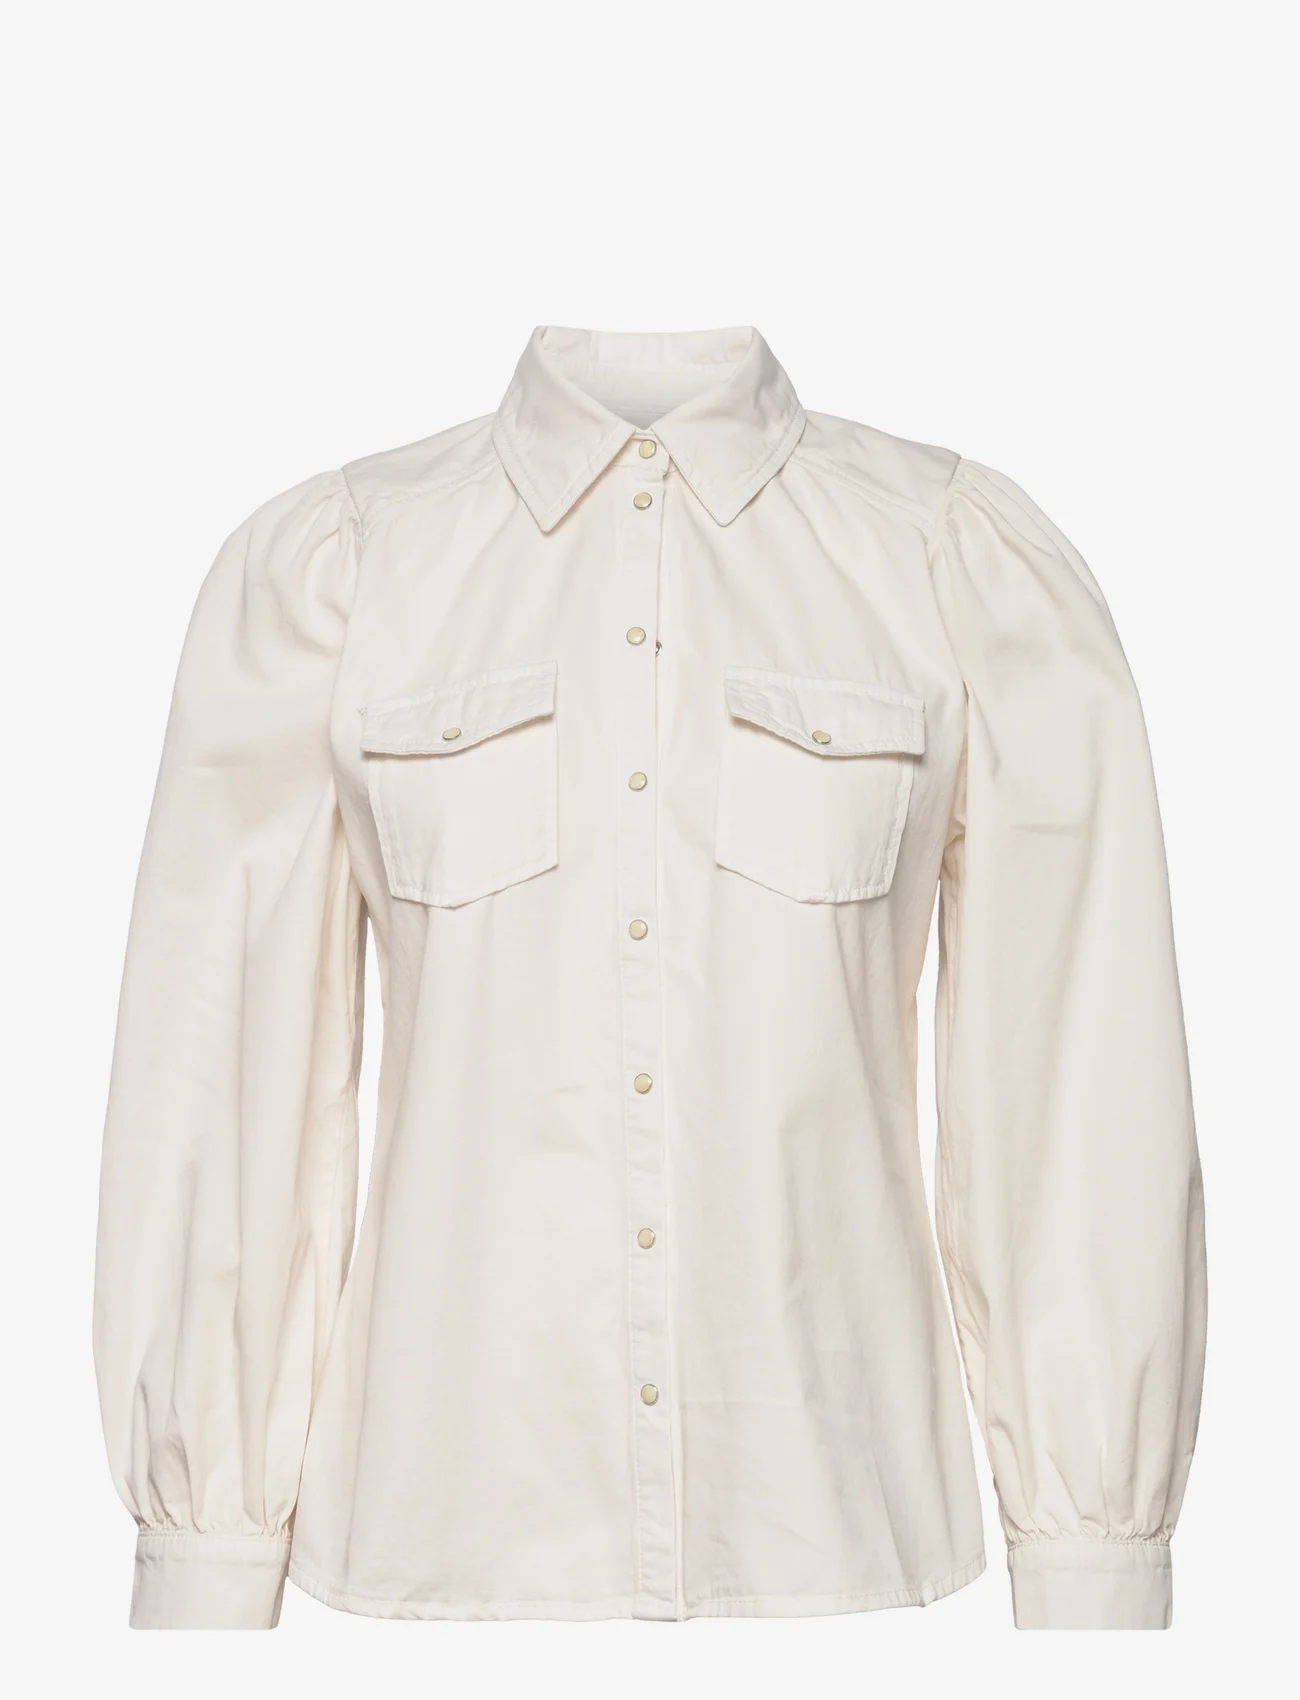 Dante6 - Percey blouse - blouses met lange mouwen - bone - 0